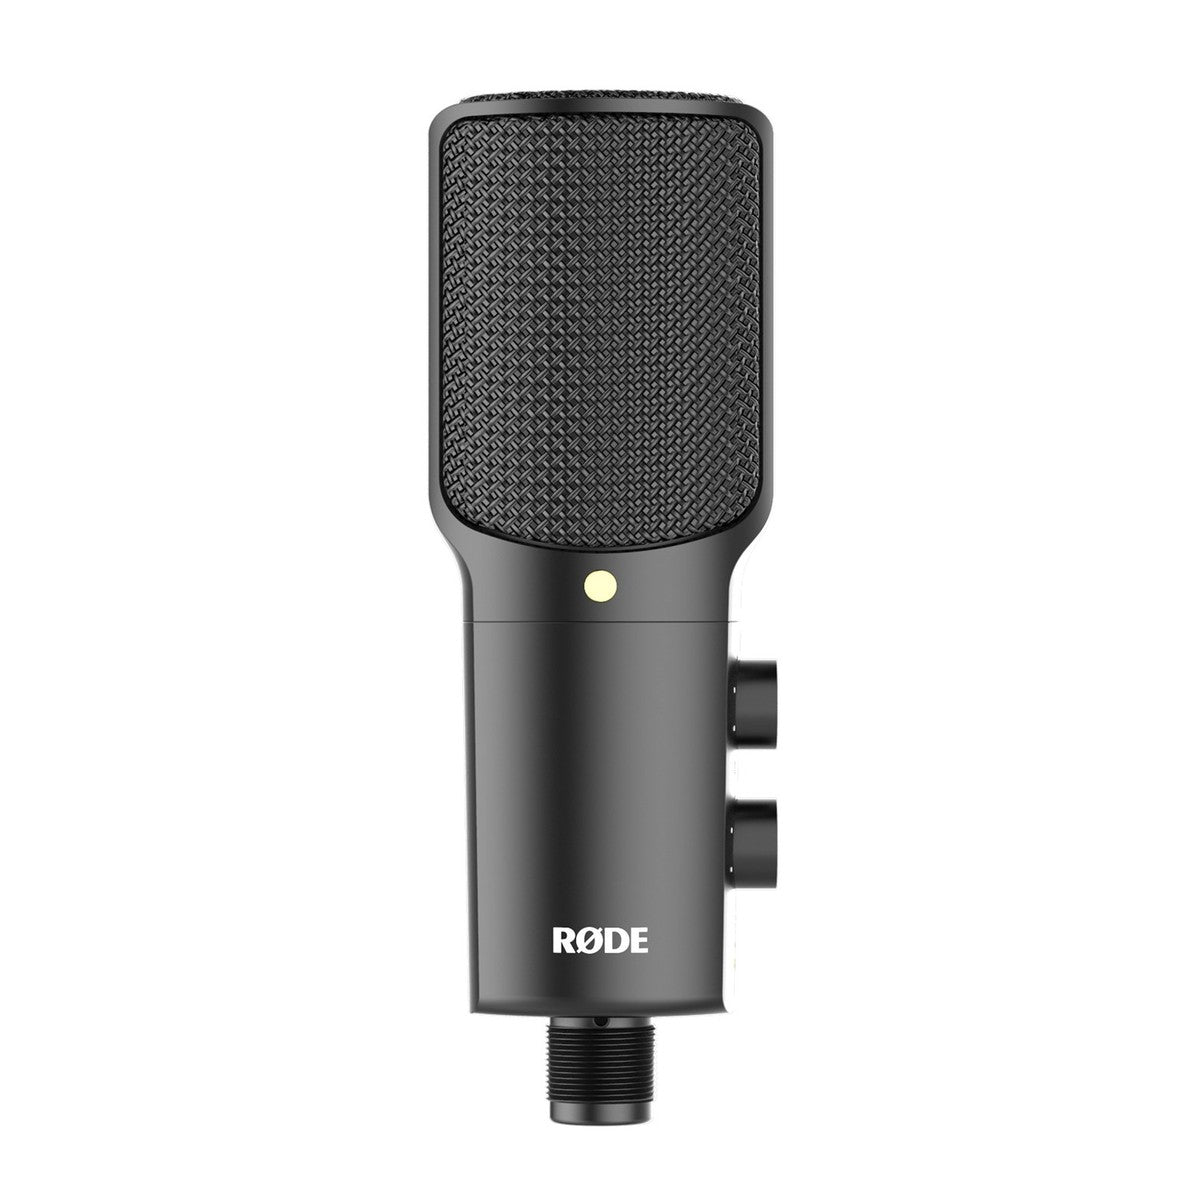 RØDE NT-USB Versatile Studio-Quality USB Microphone